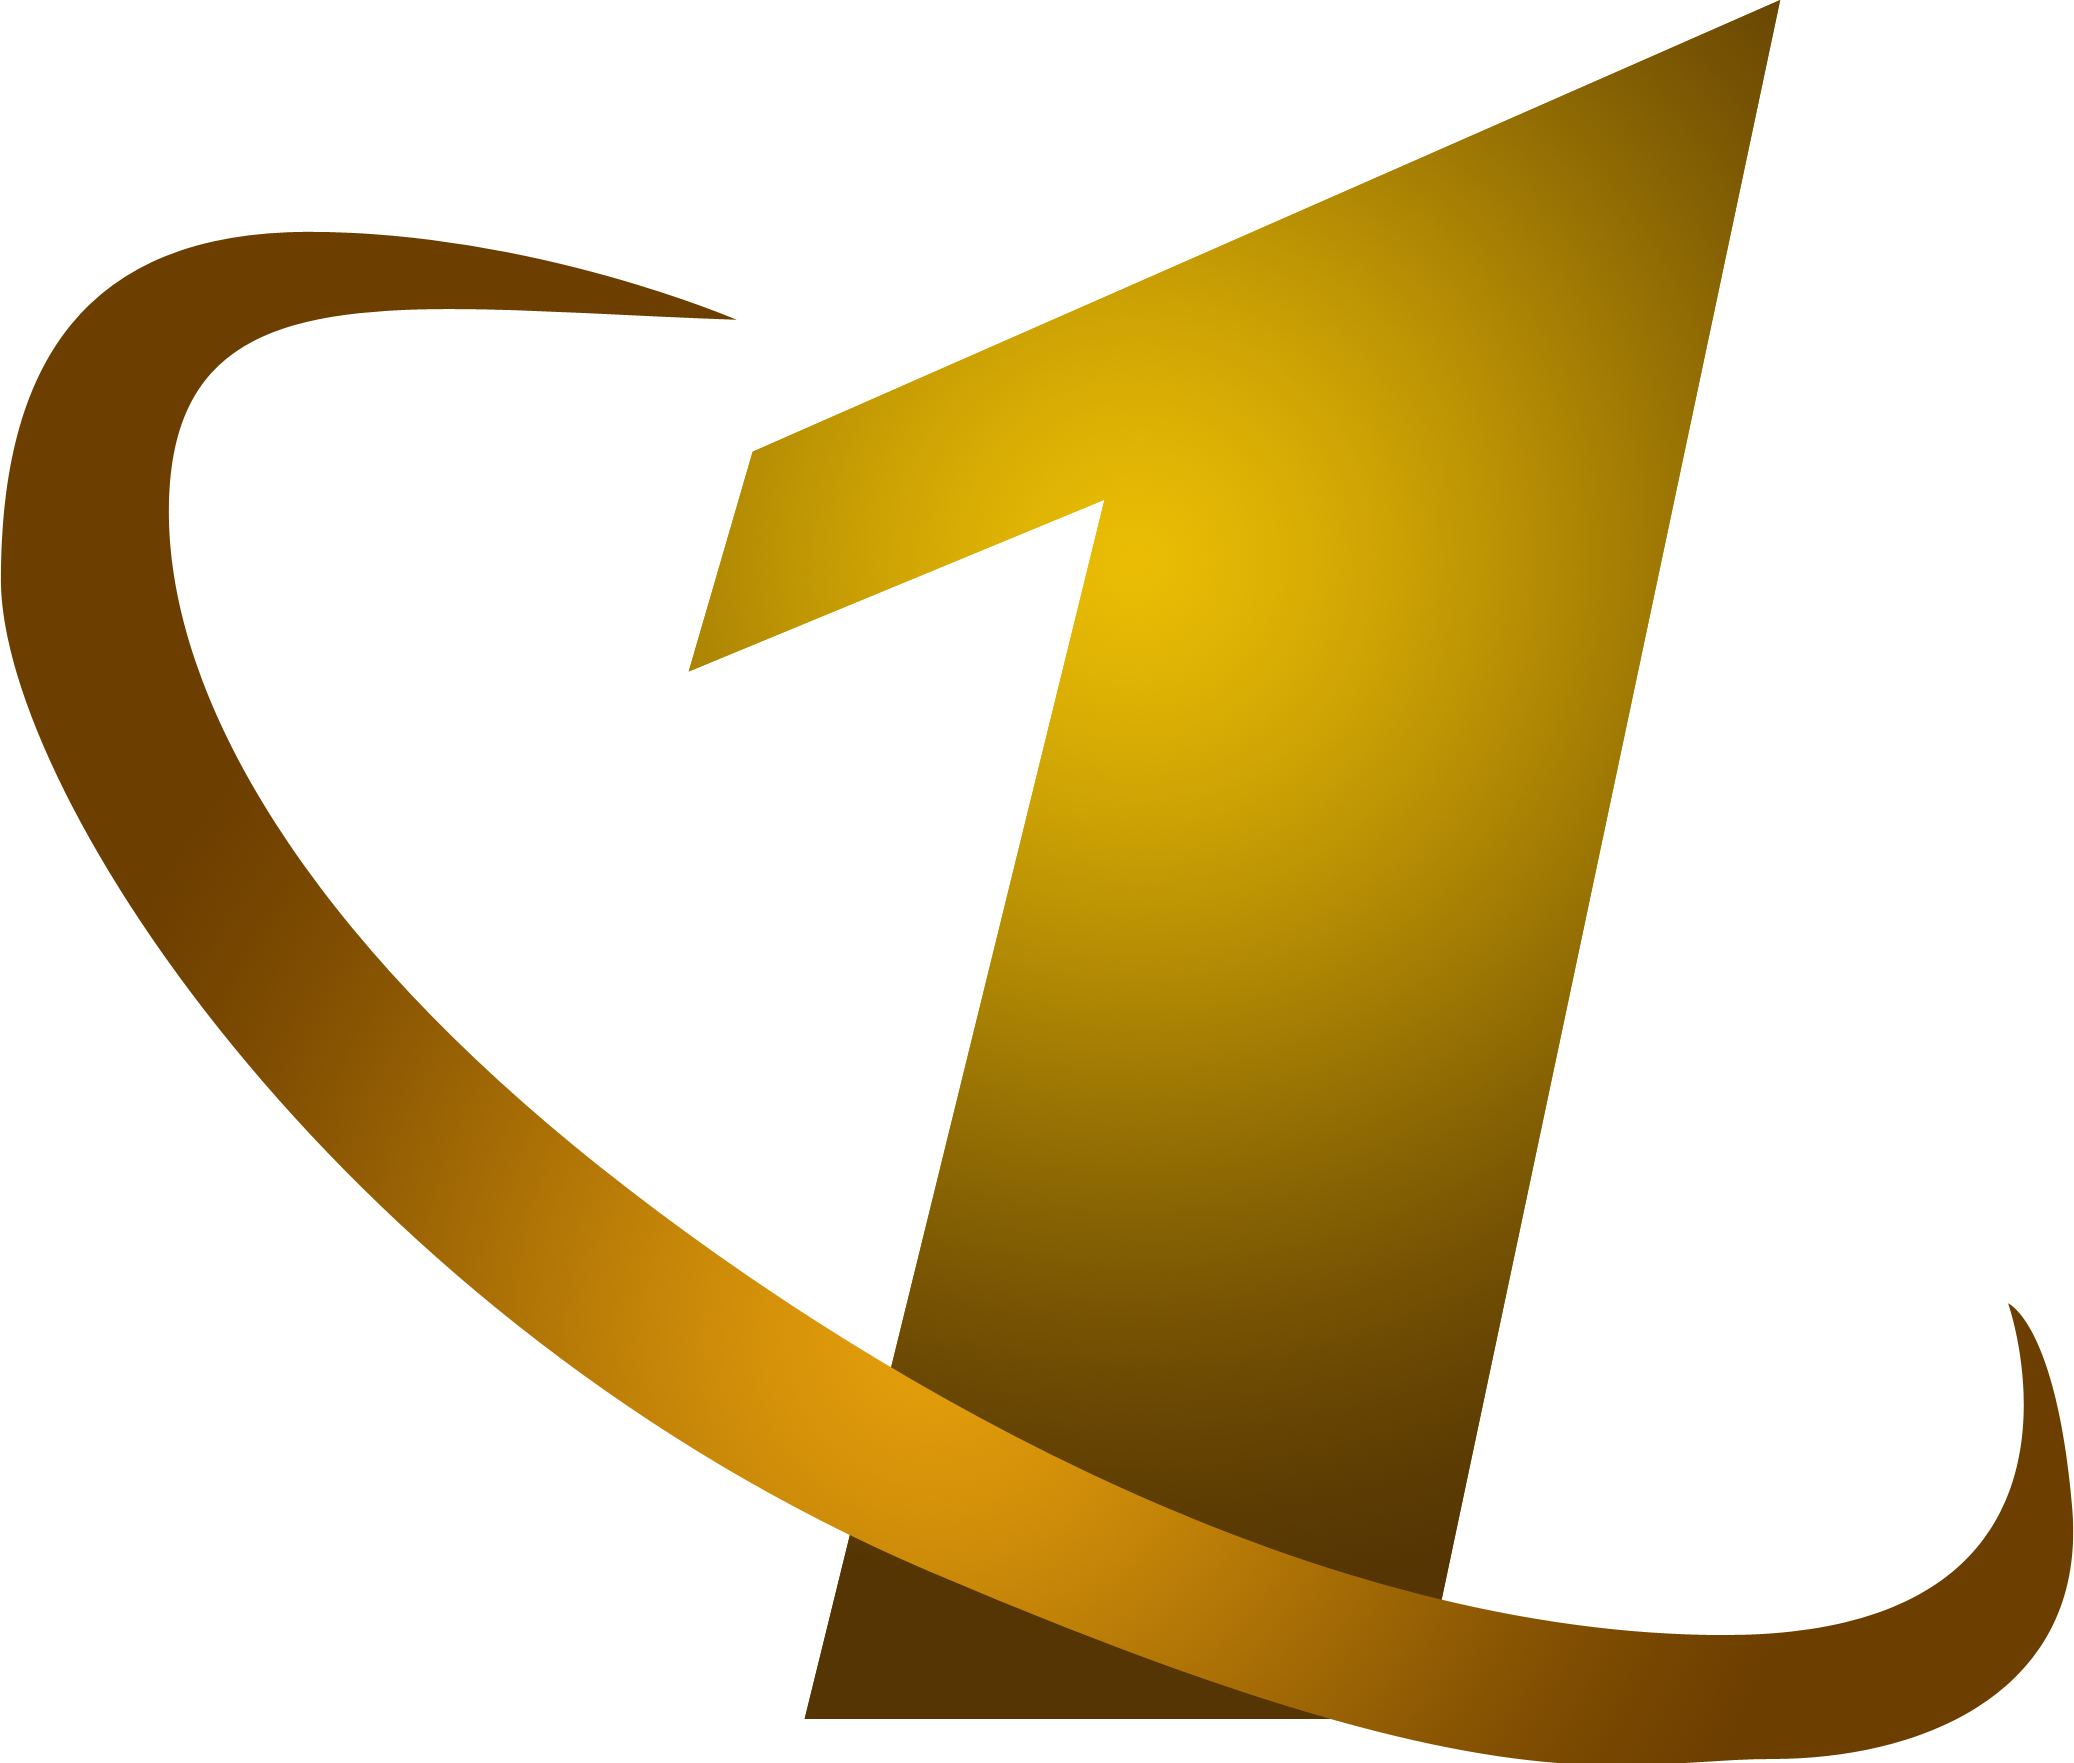 ОРТ логотип 1997-2000. Первый канал логотип 1995. ОРТ 1997 логотип. Эмблема канала ОРТ.